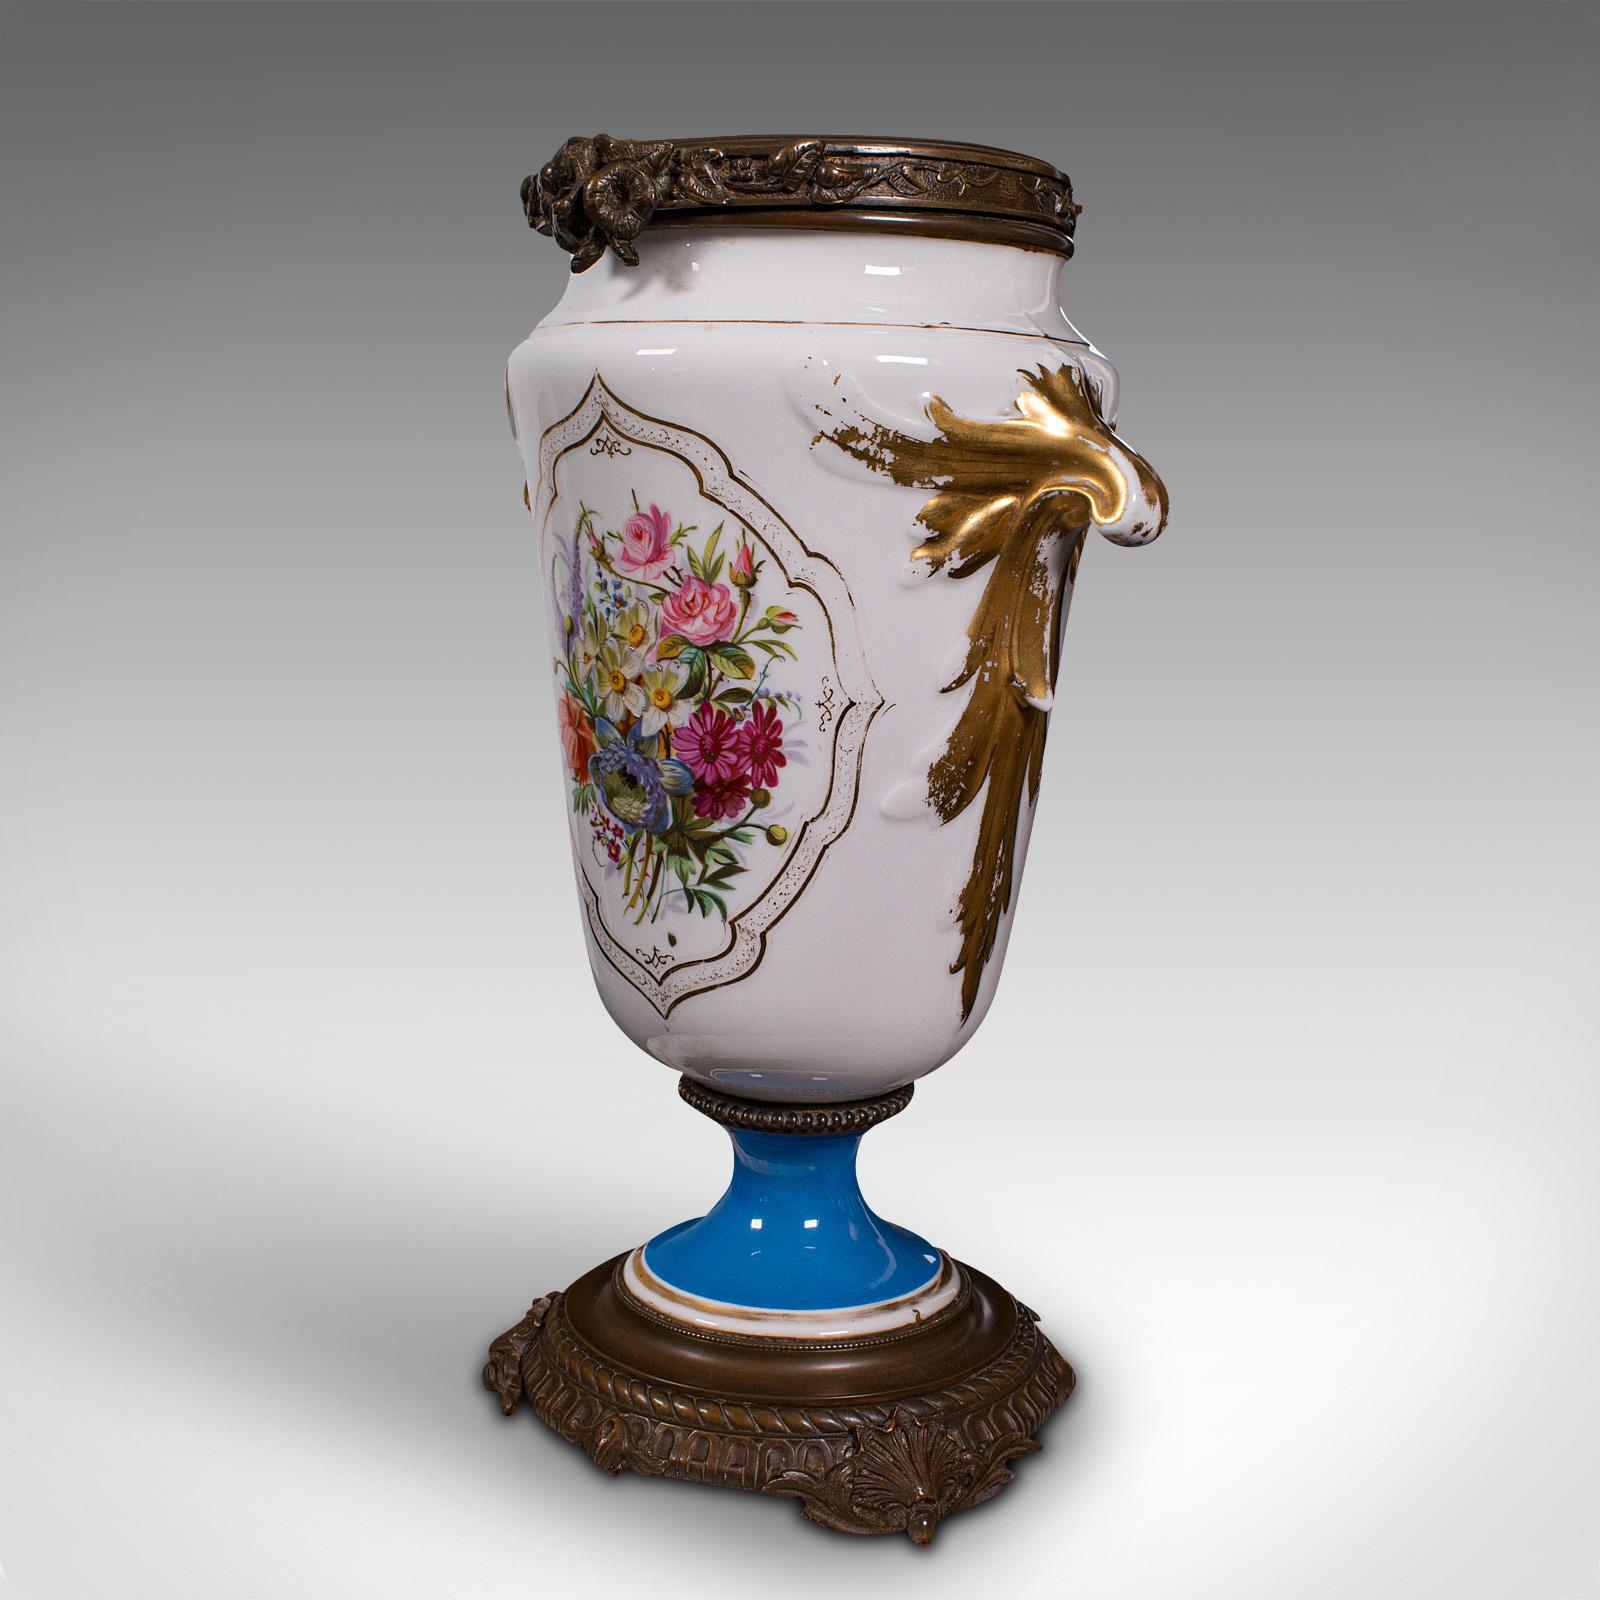 Antique Decorative Jardiniere, French, Ceramic, Display Planter, Vase, Victorian In Good Condition For Sale In Hele, Devon, GB